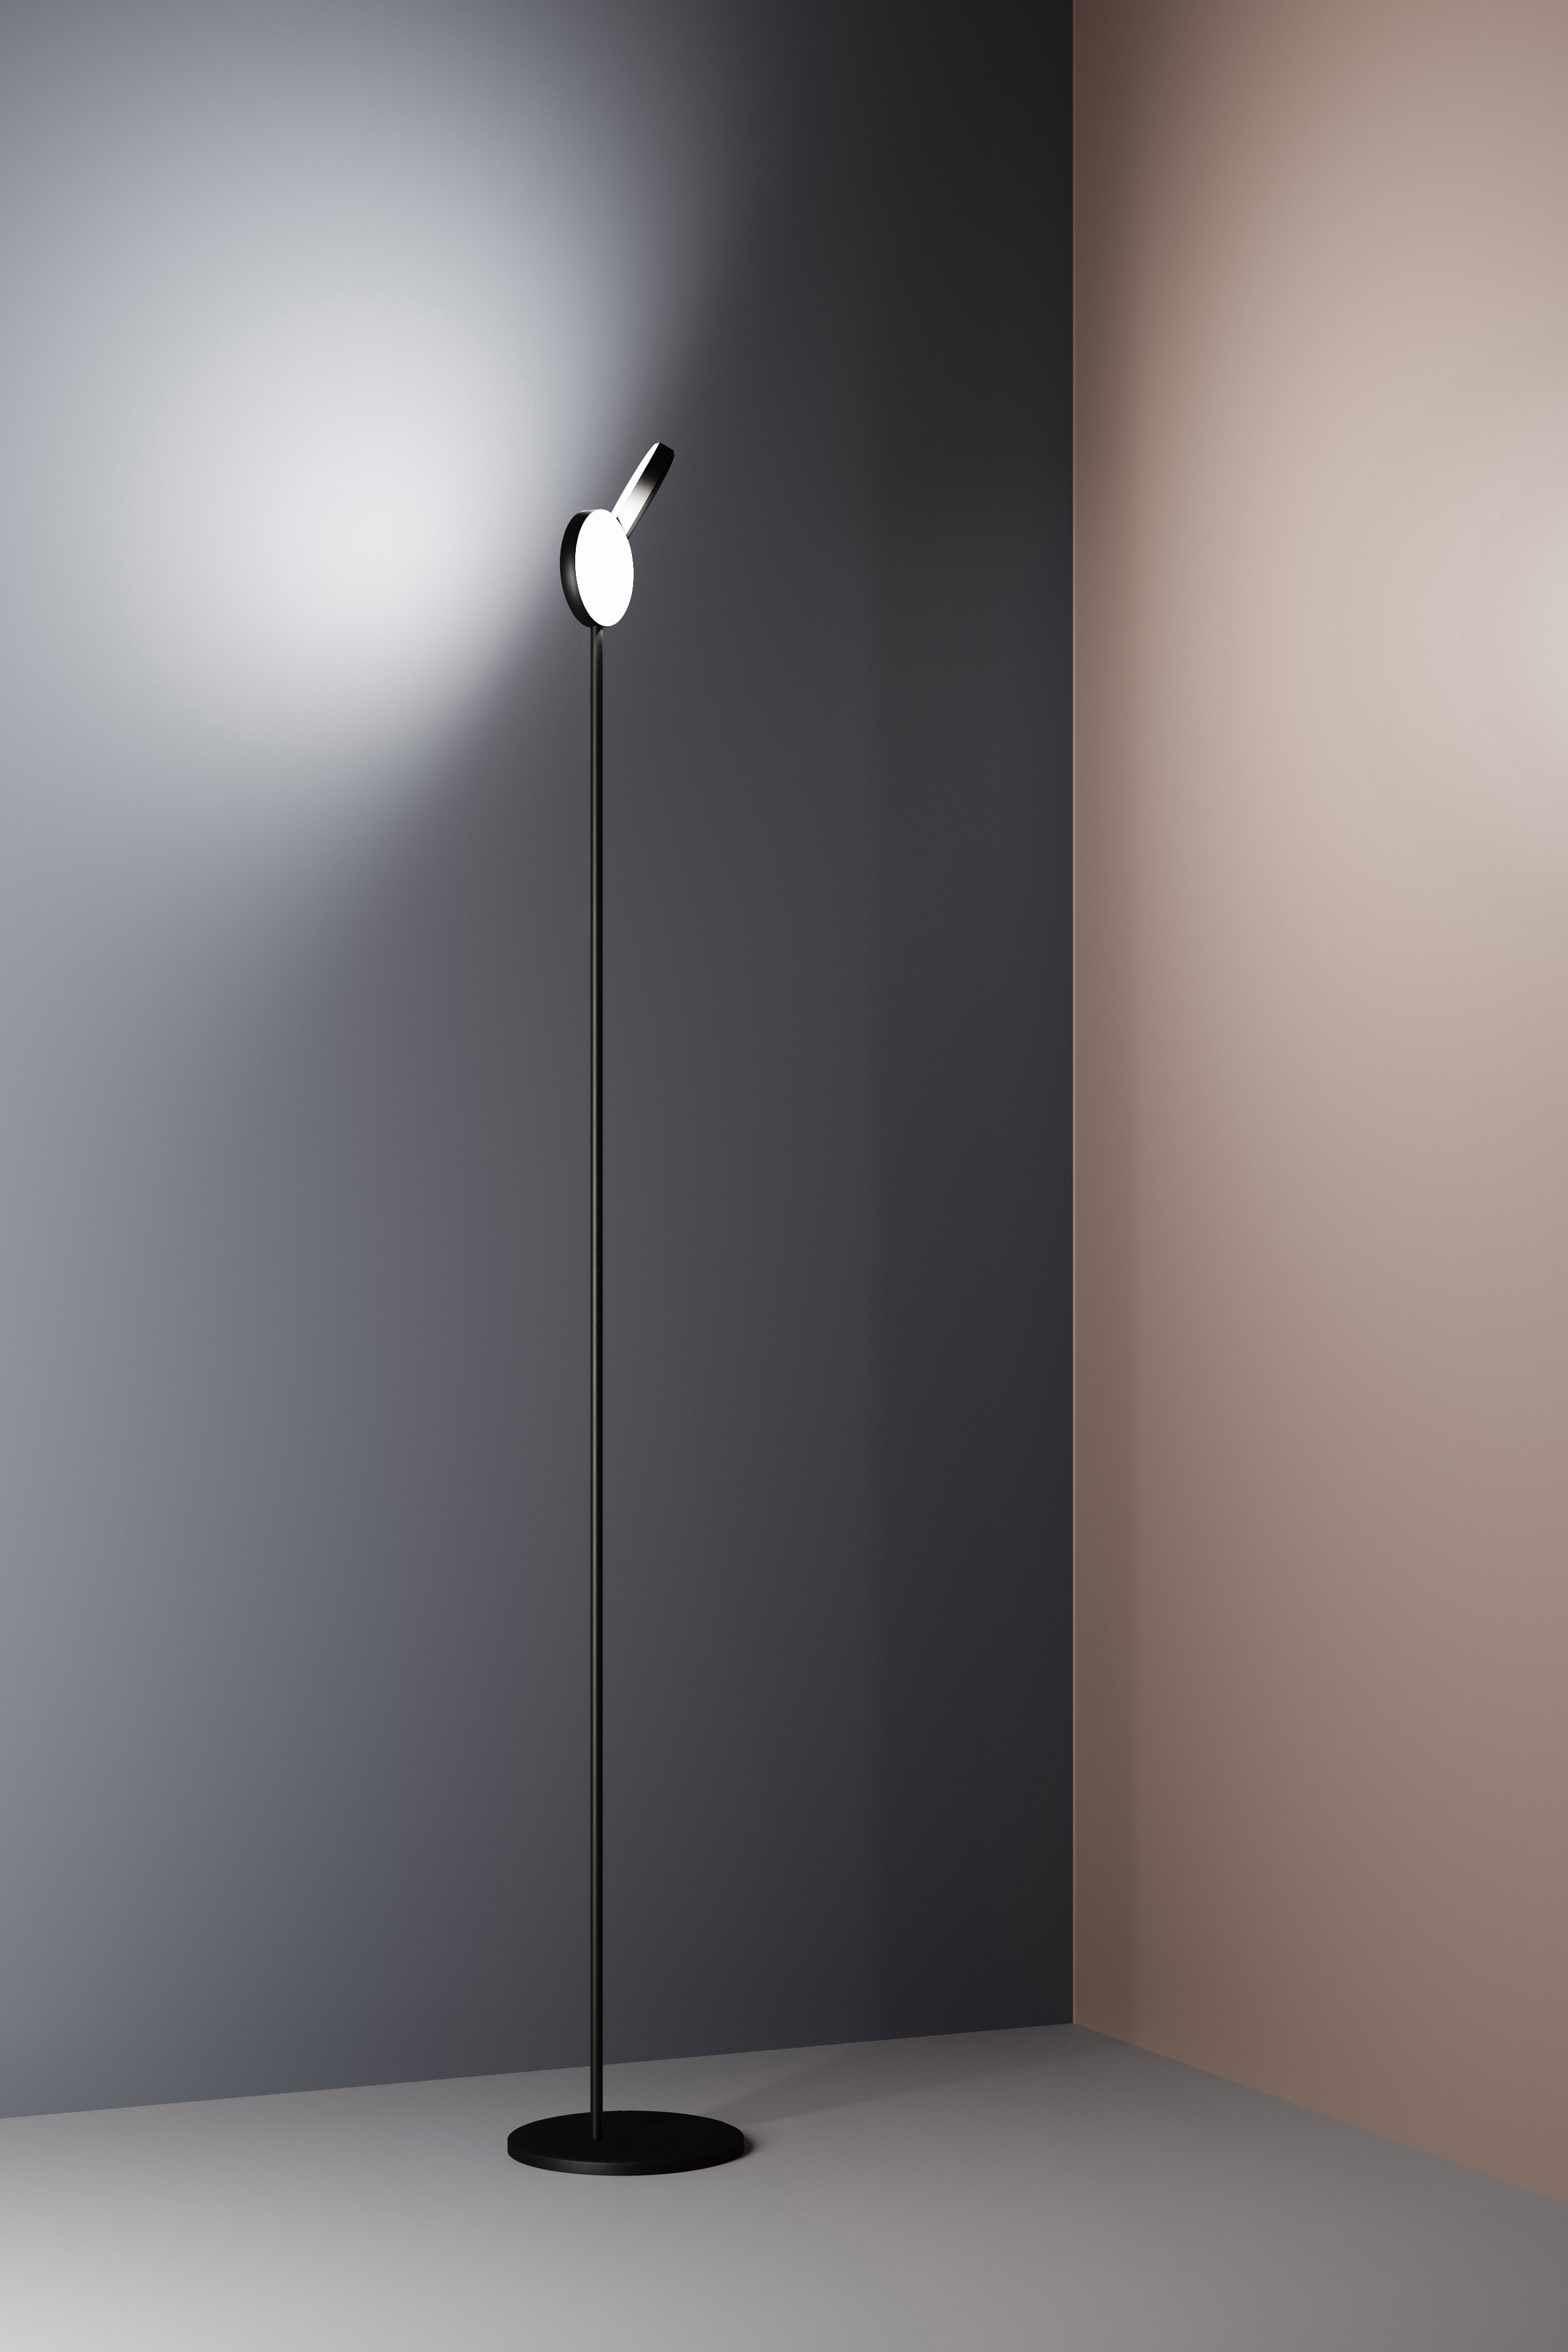 Claesson Koivisto Rune's Optunia lights at Milan design week